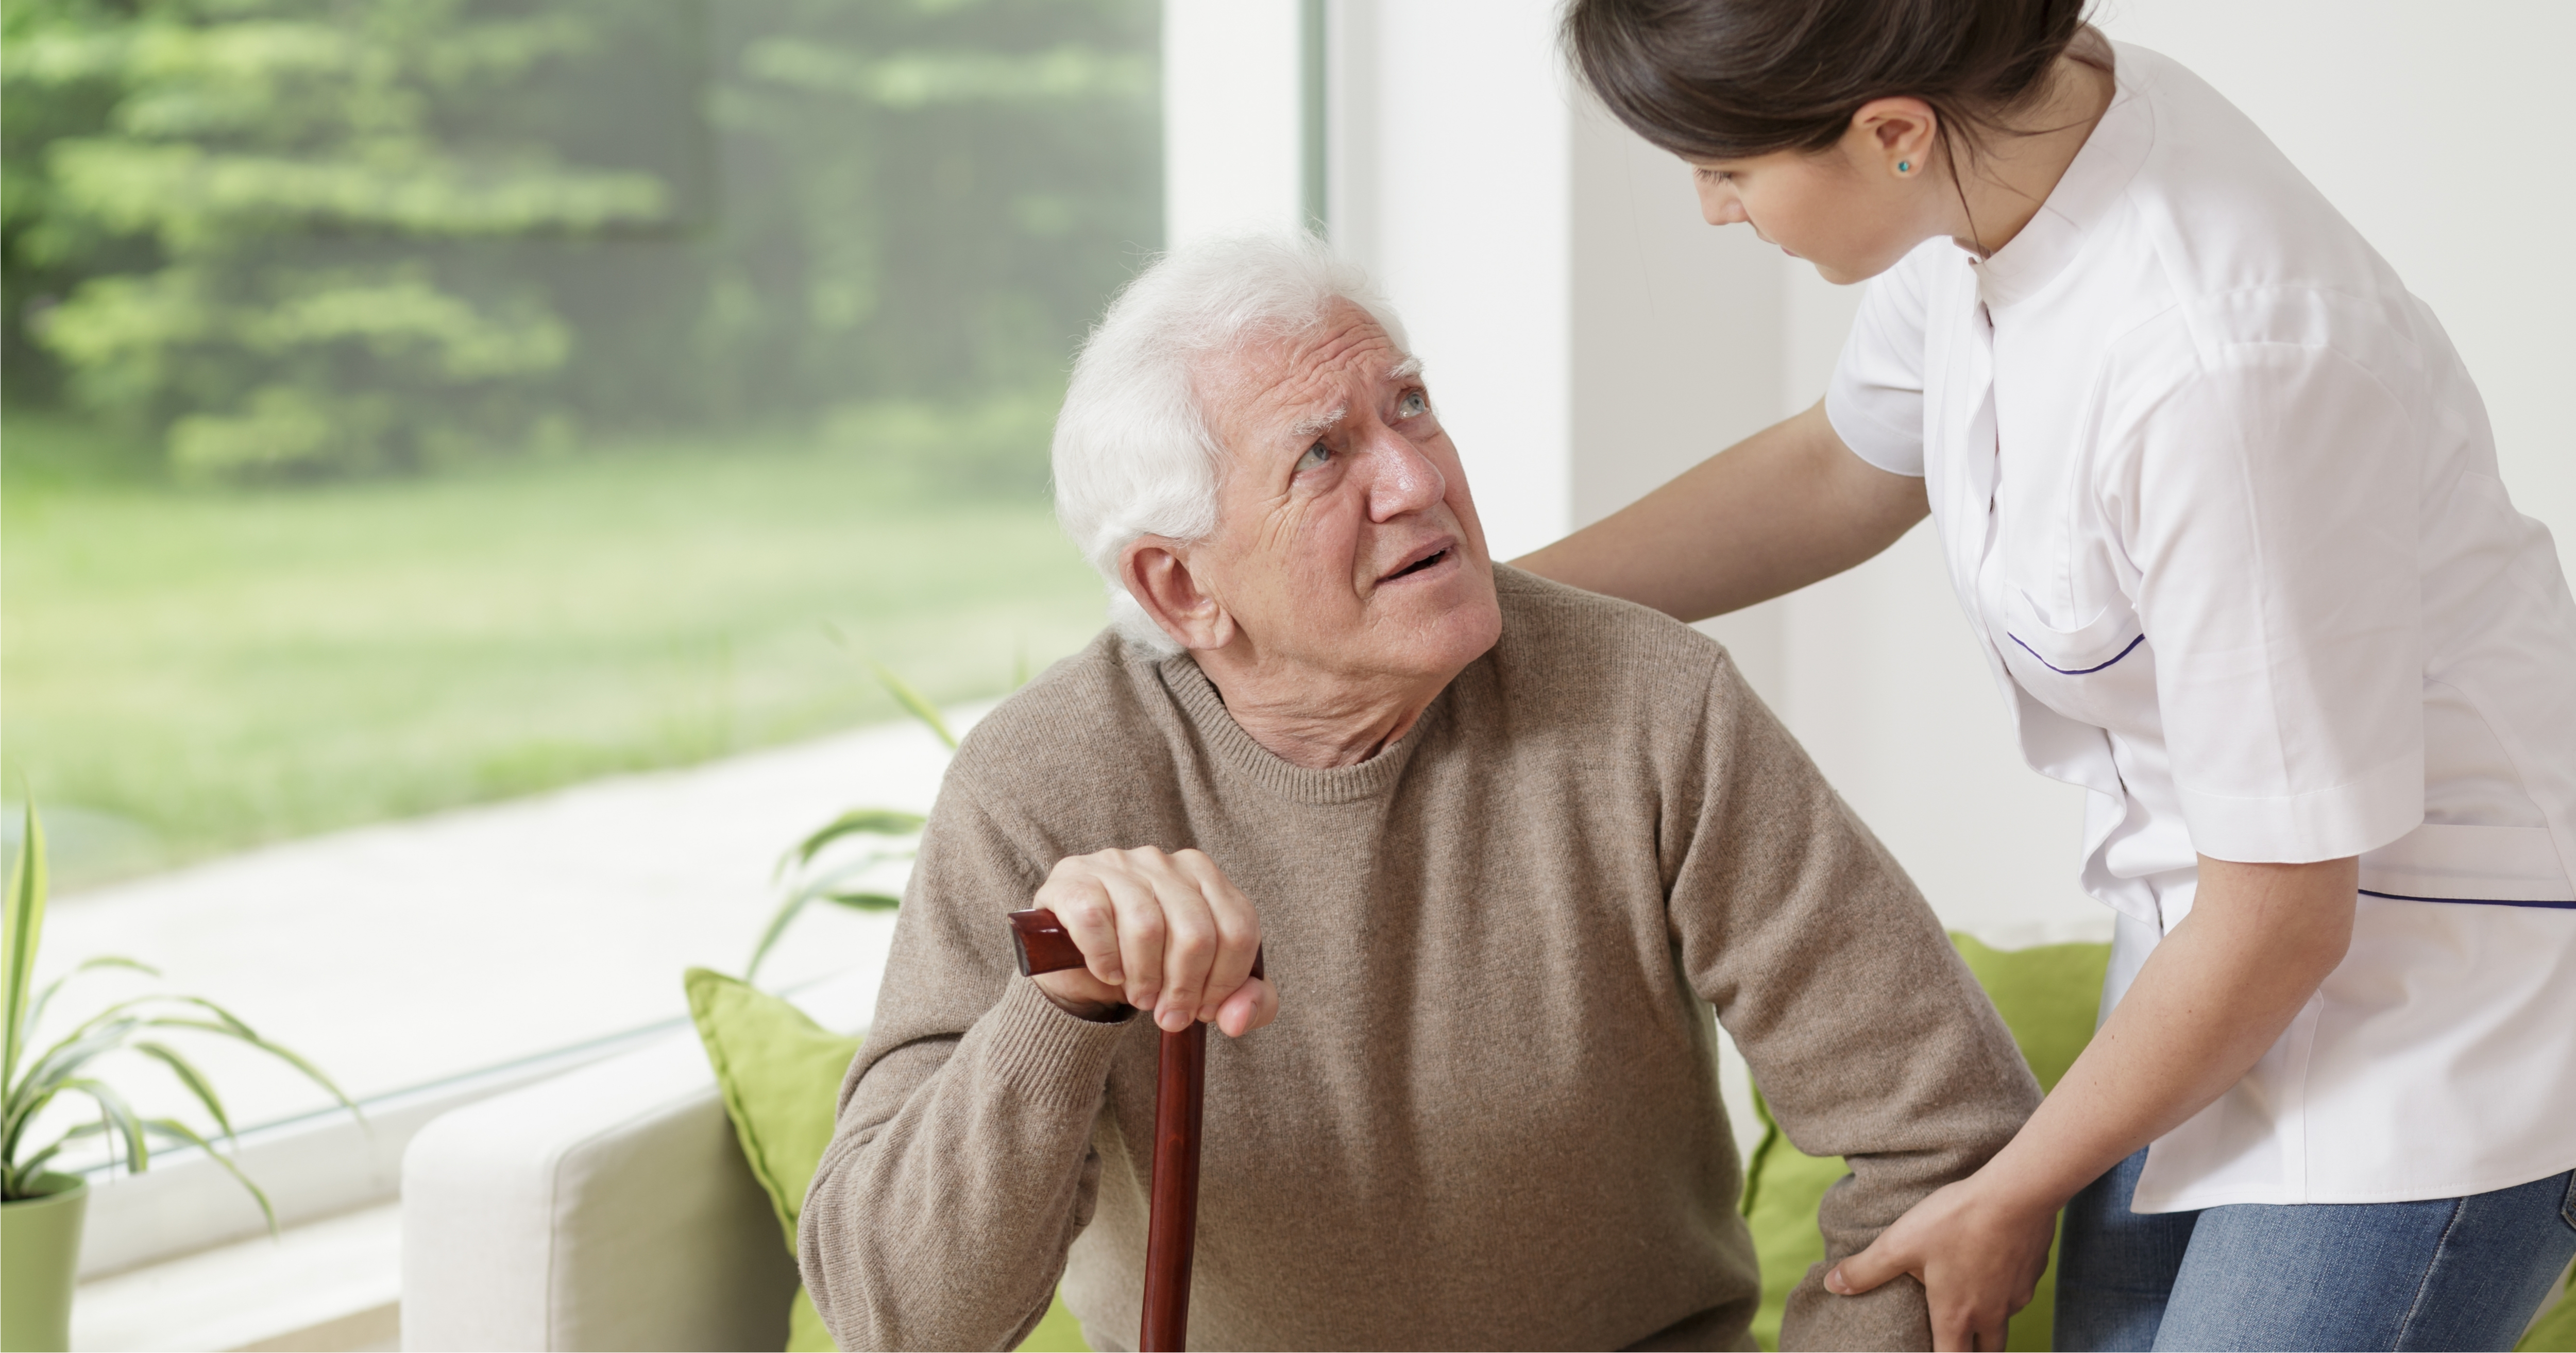 What Should I do When My Aging Parent has Parkinson's?